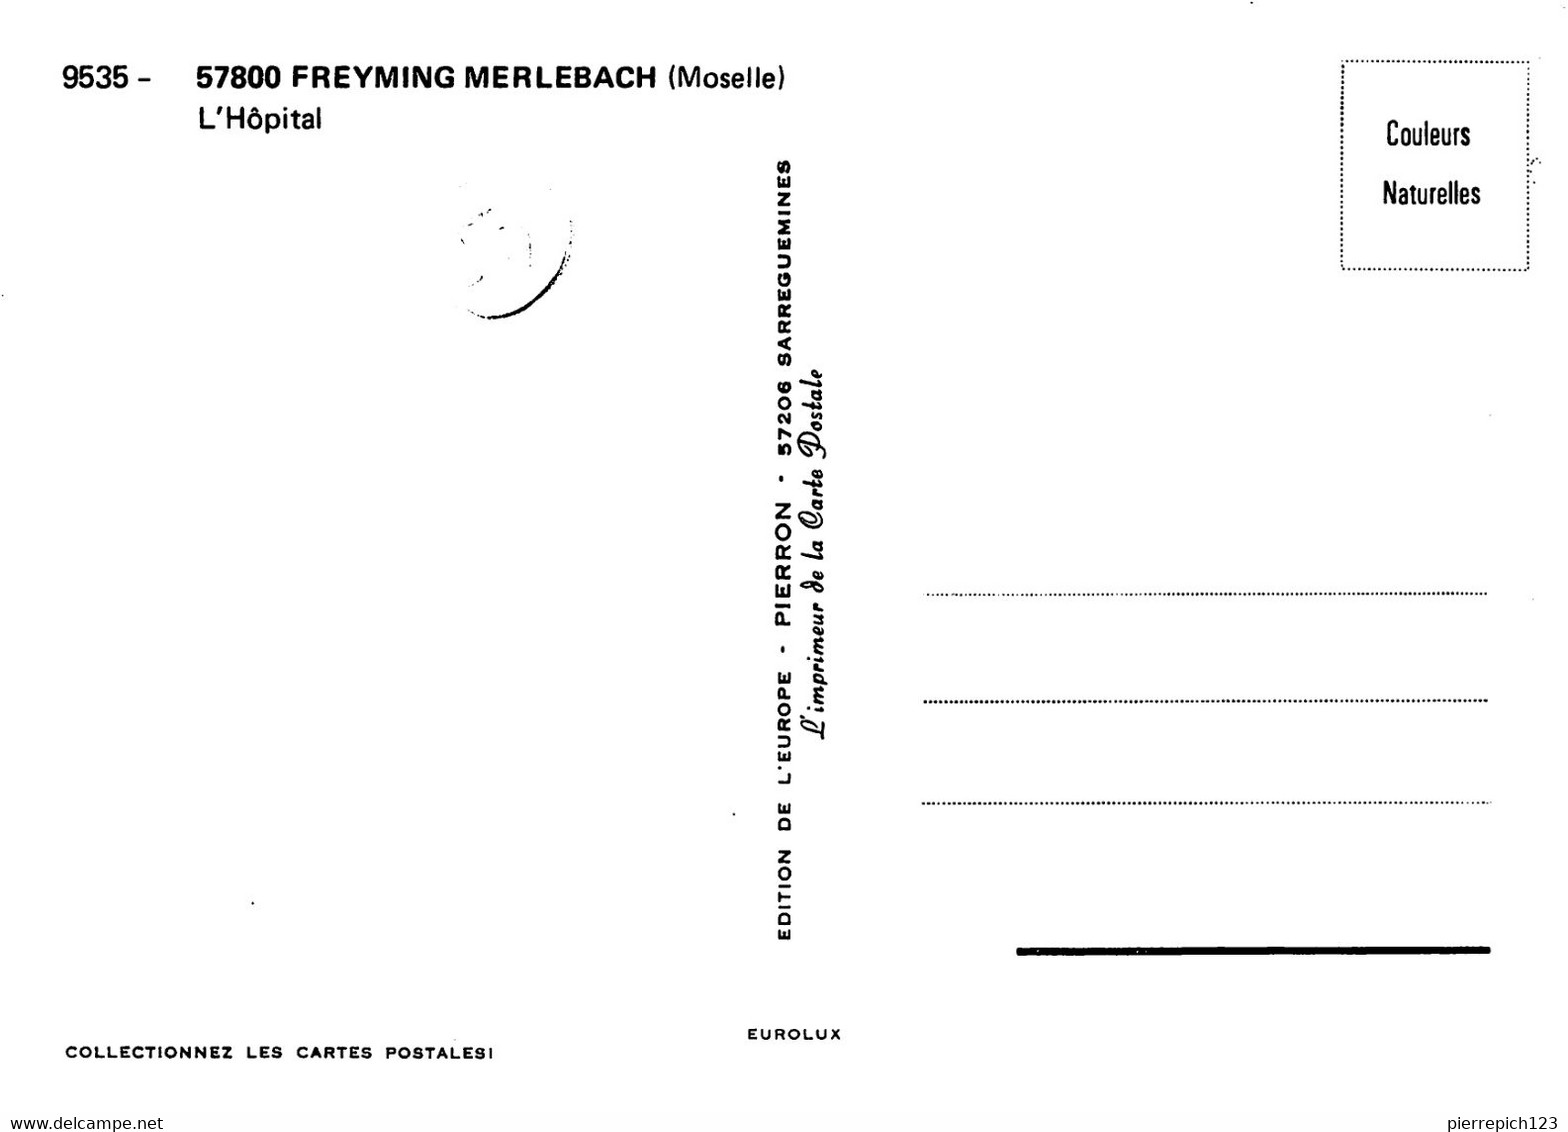 57 - Freyming Merlebach - L'Hôpital - Freyming Merlebach